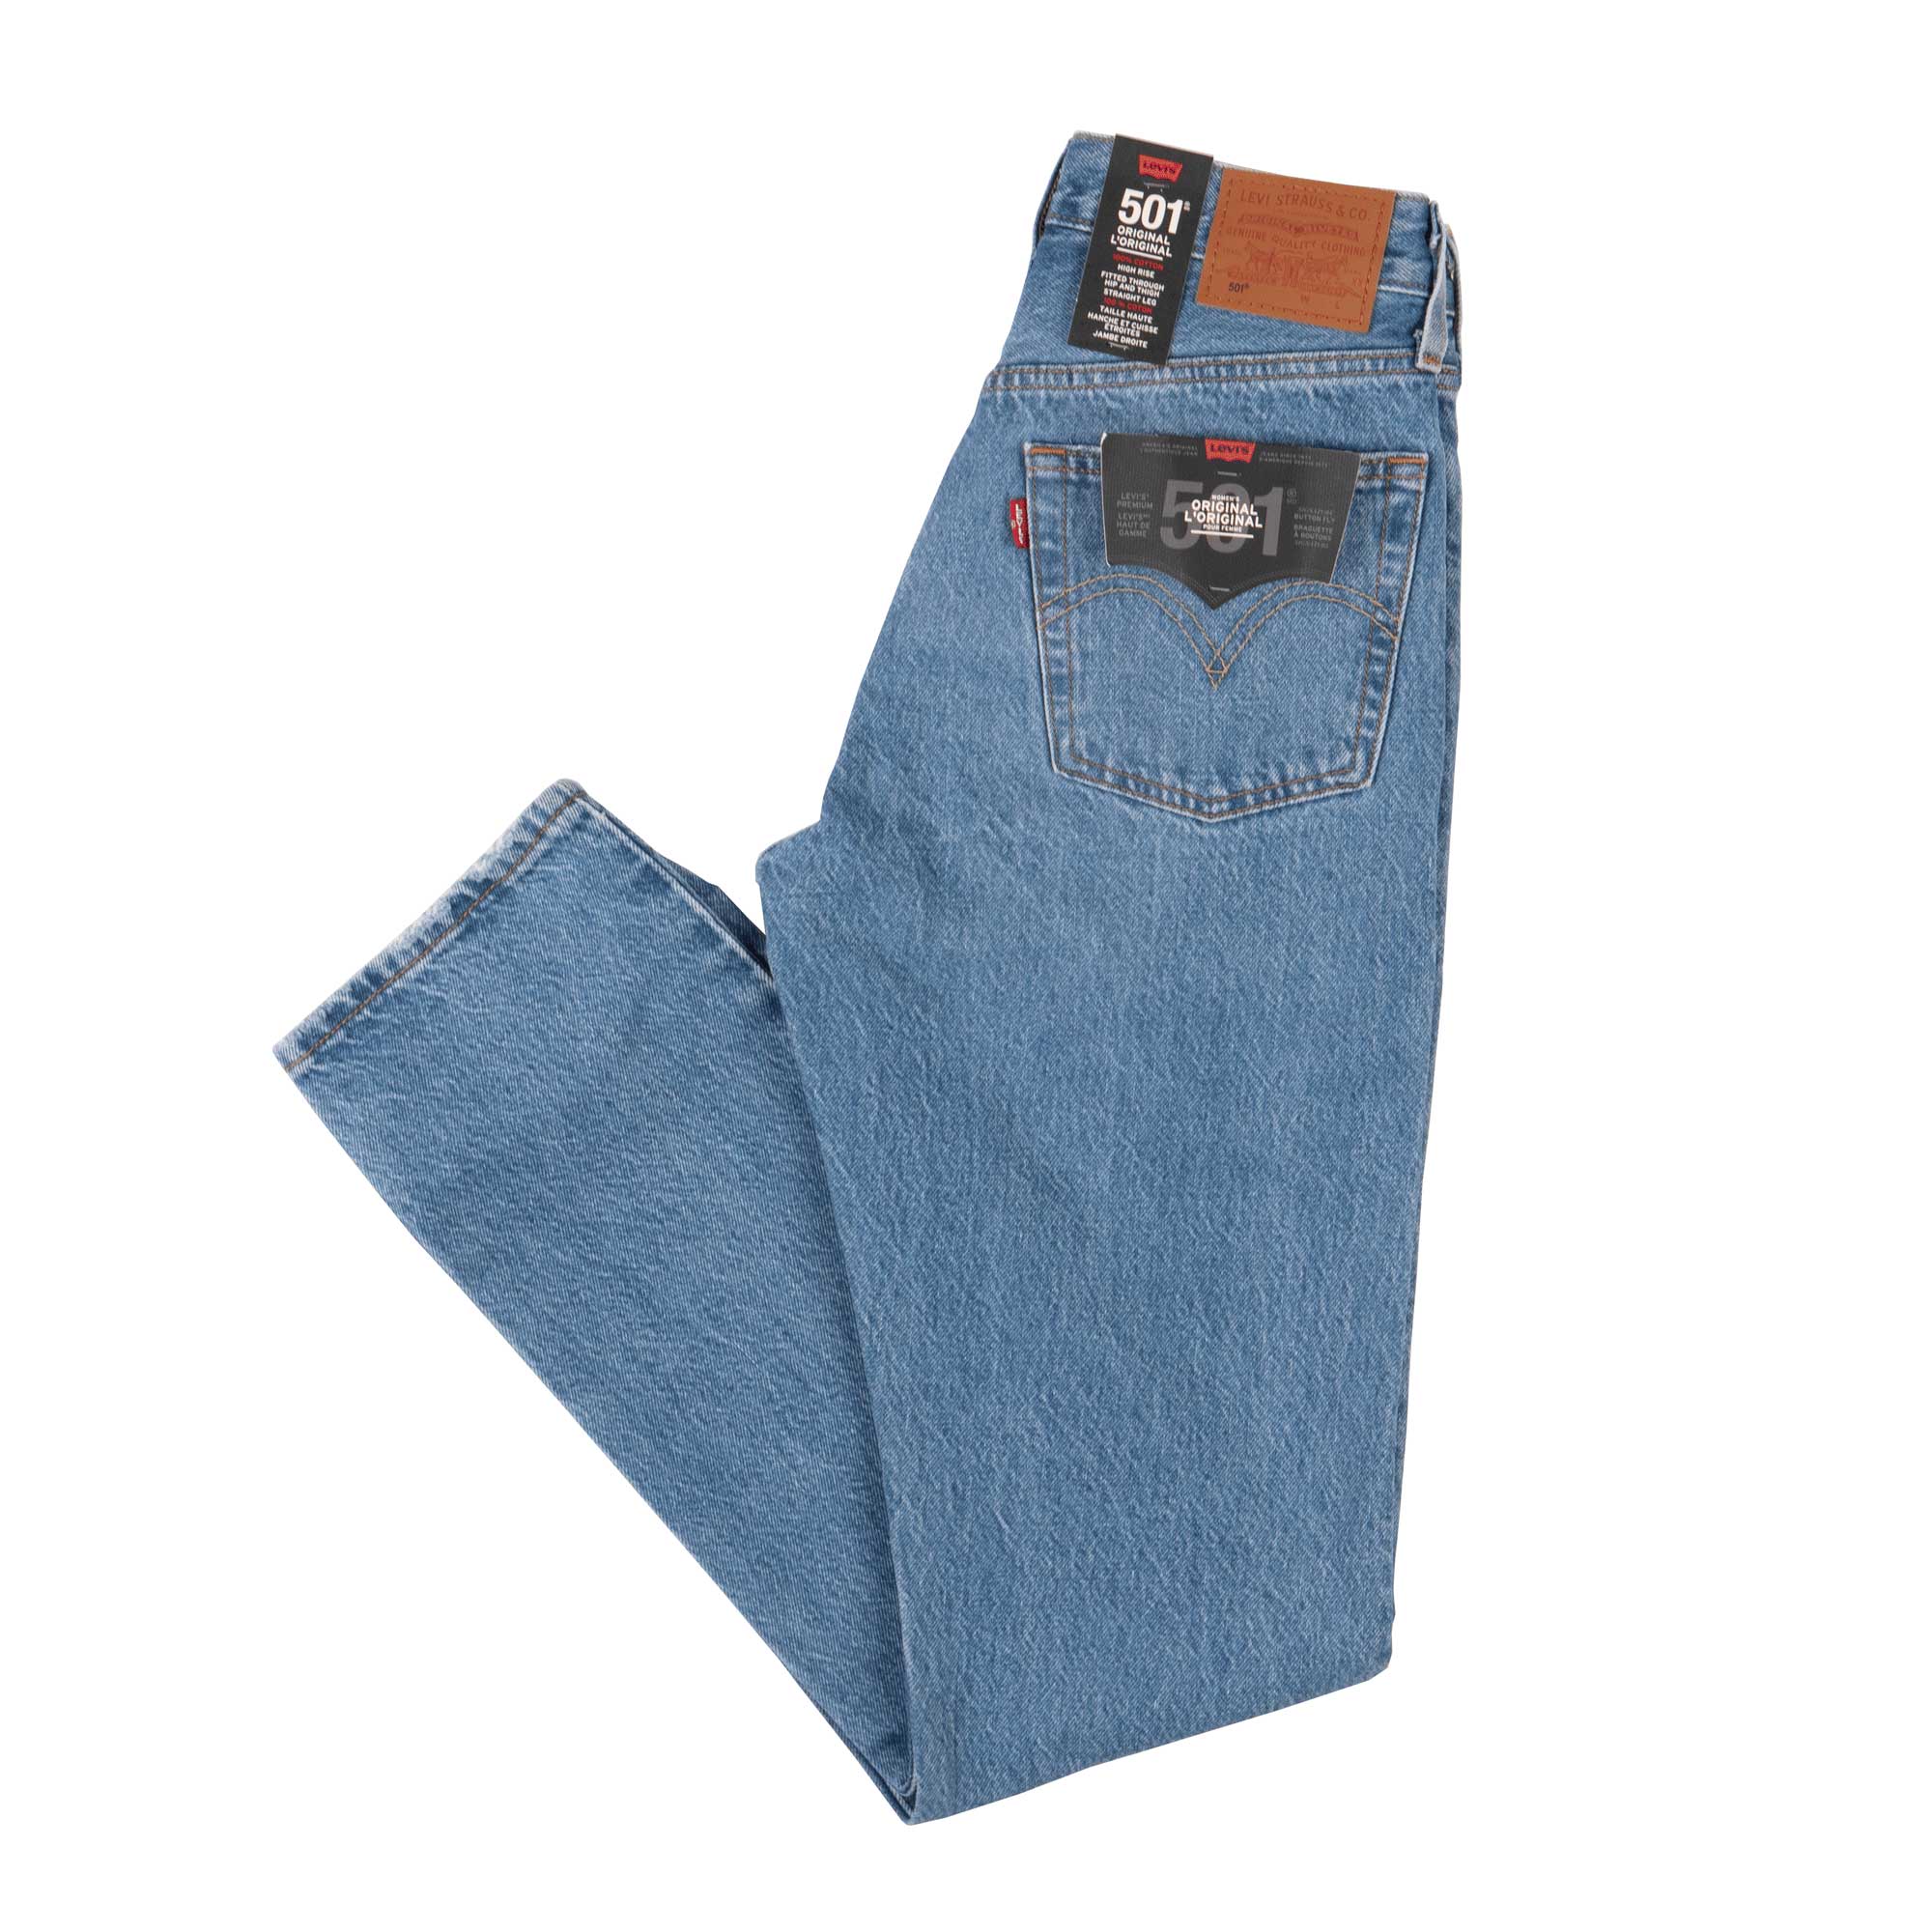 Levi's 501 Original Fit Jeans for Women for sale